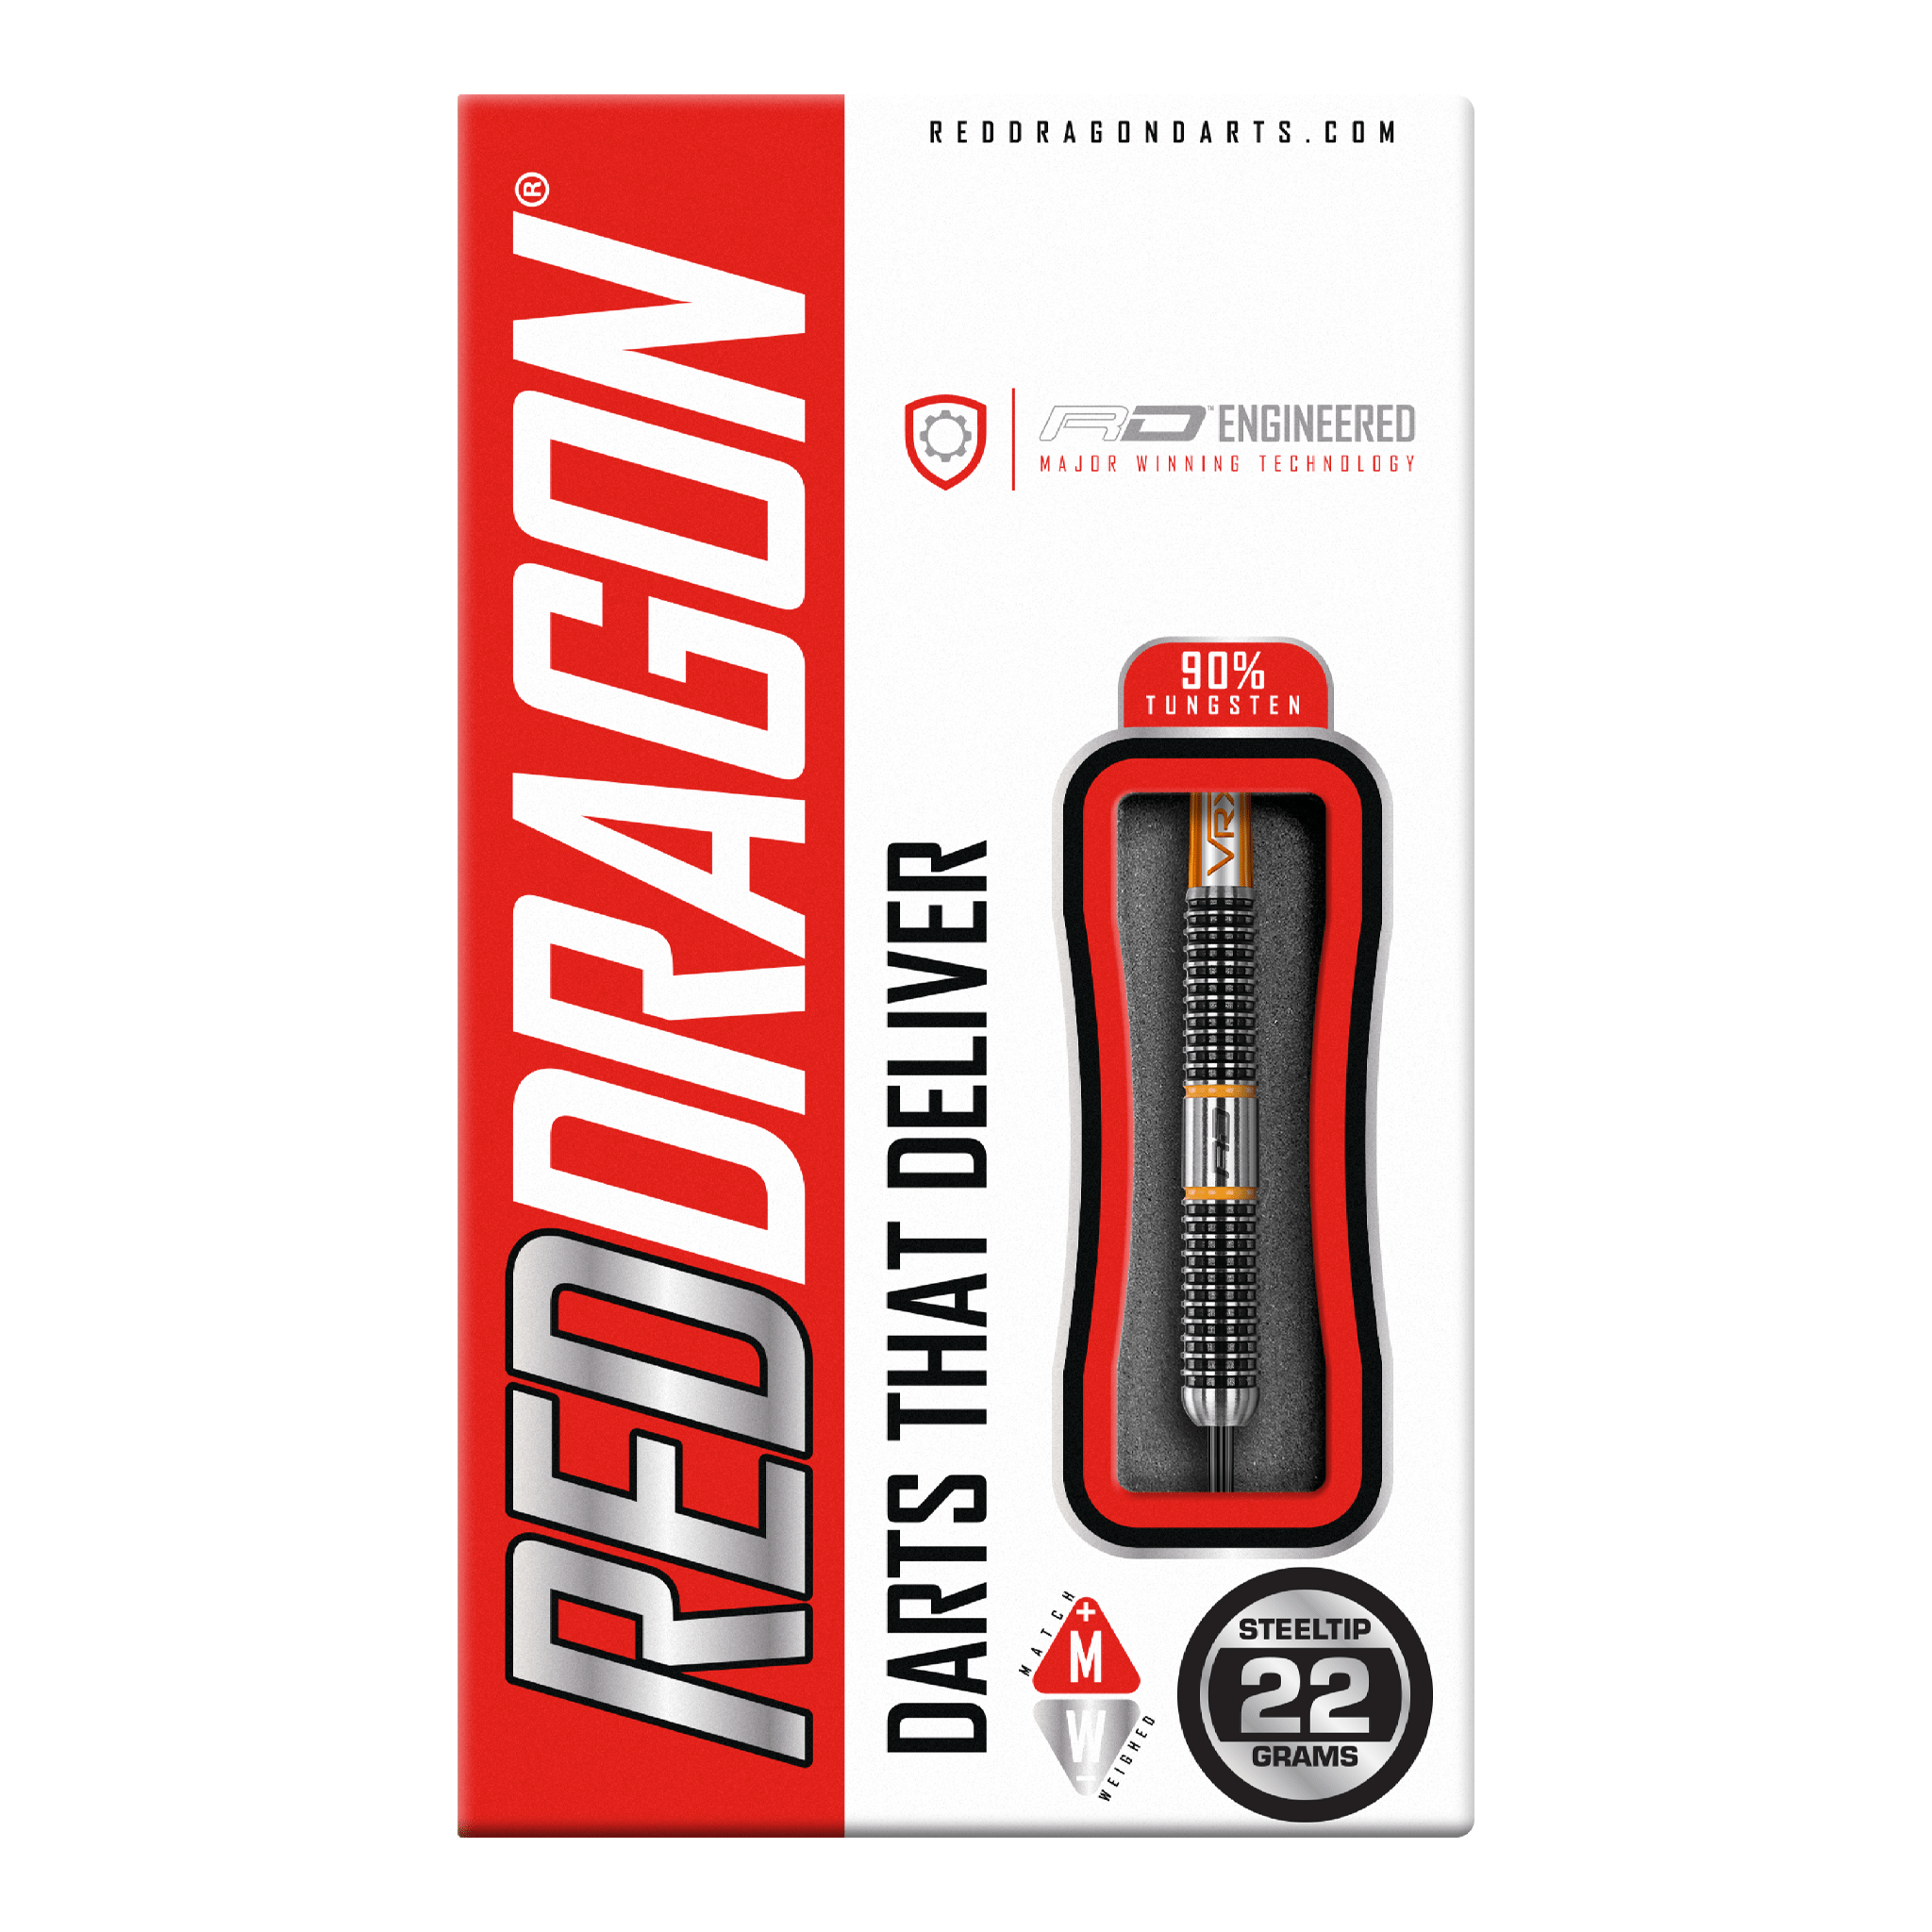 Red Dragon Amberjack 18 - 90% Tungsten Steel Tip Darts Darts